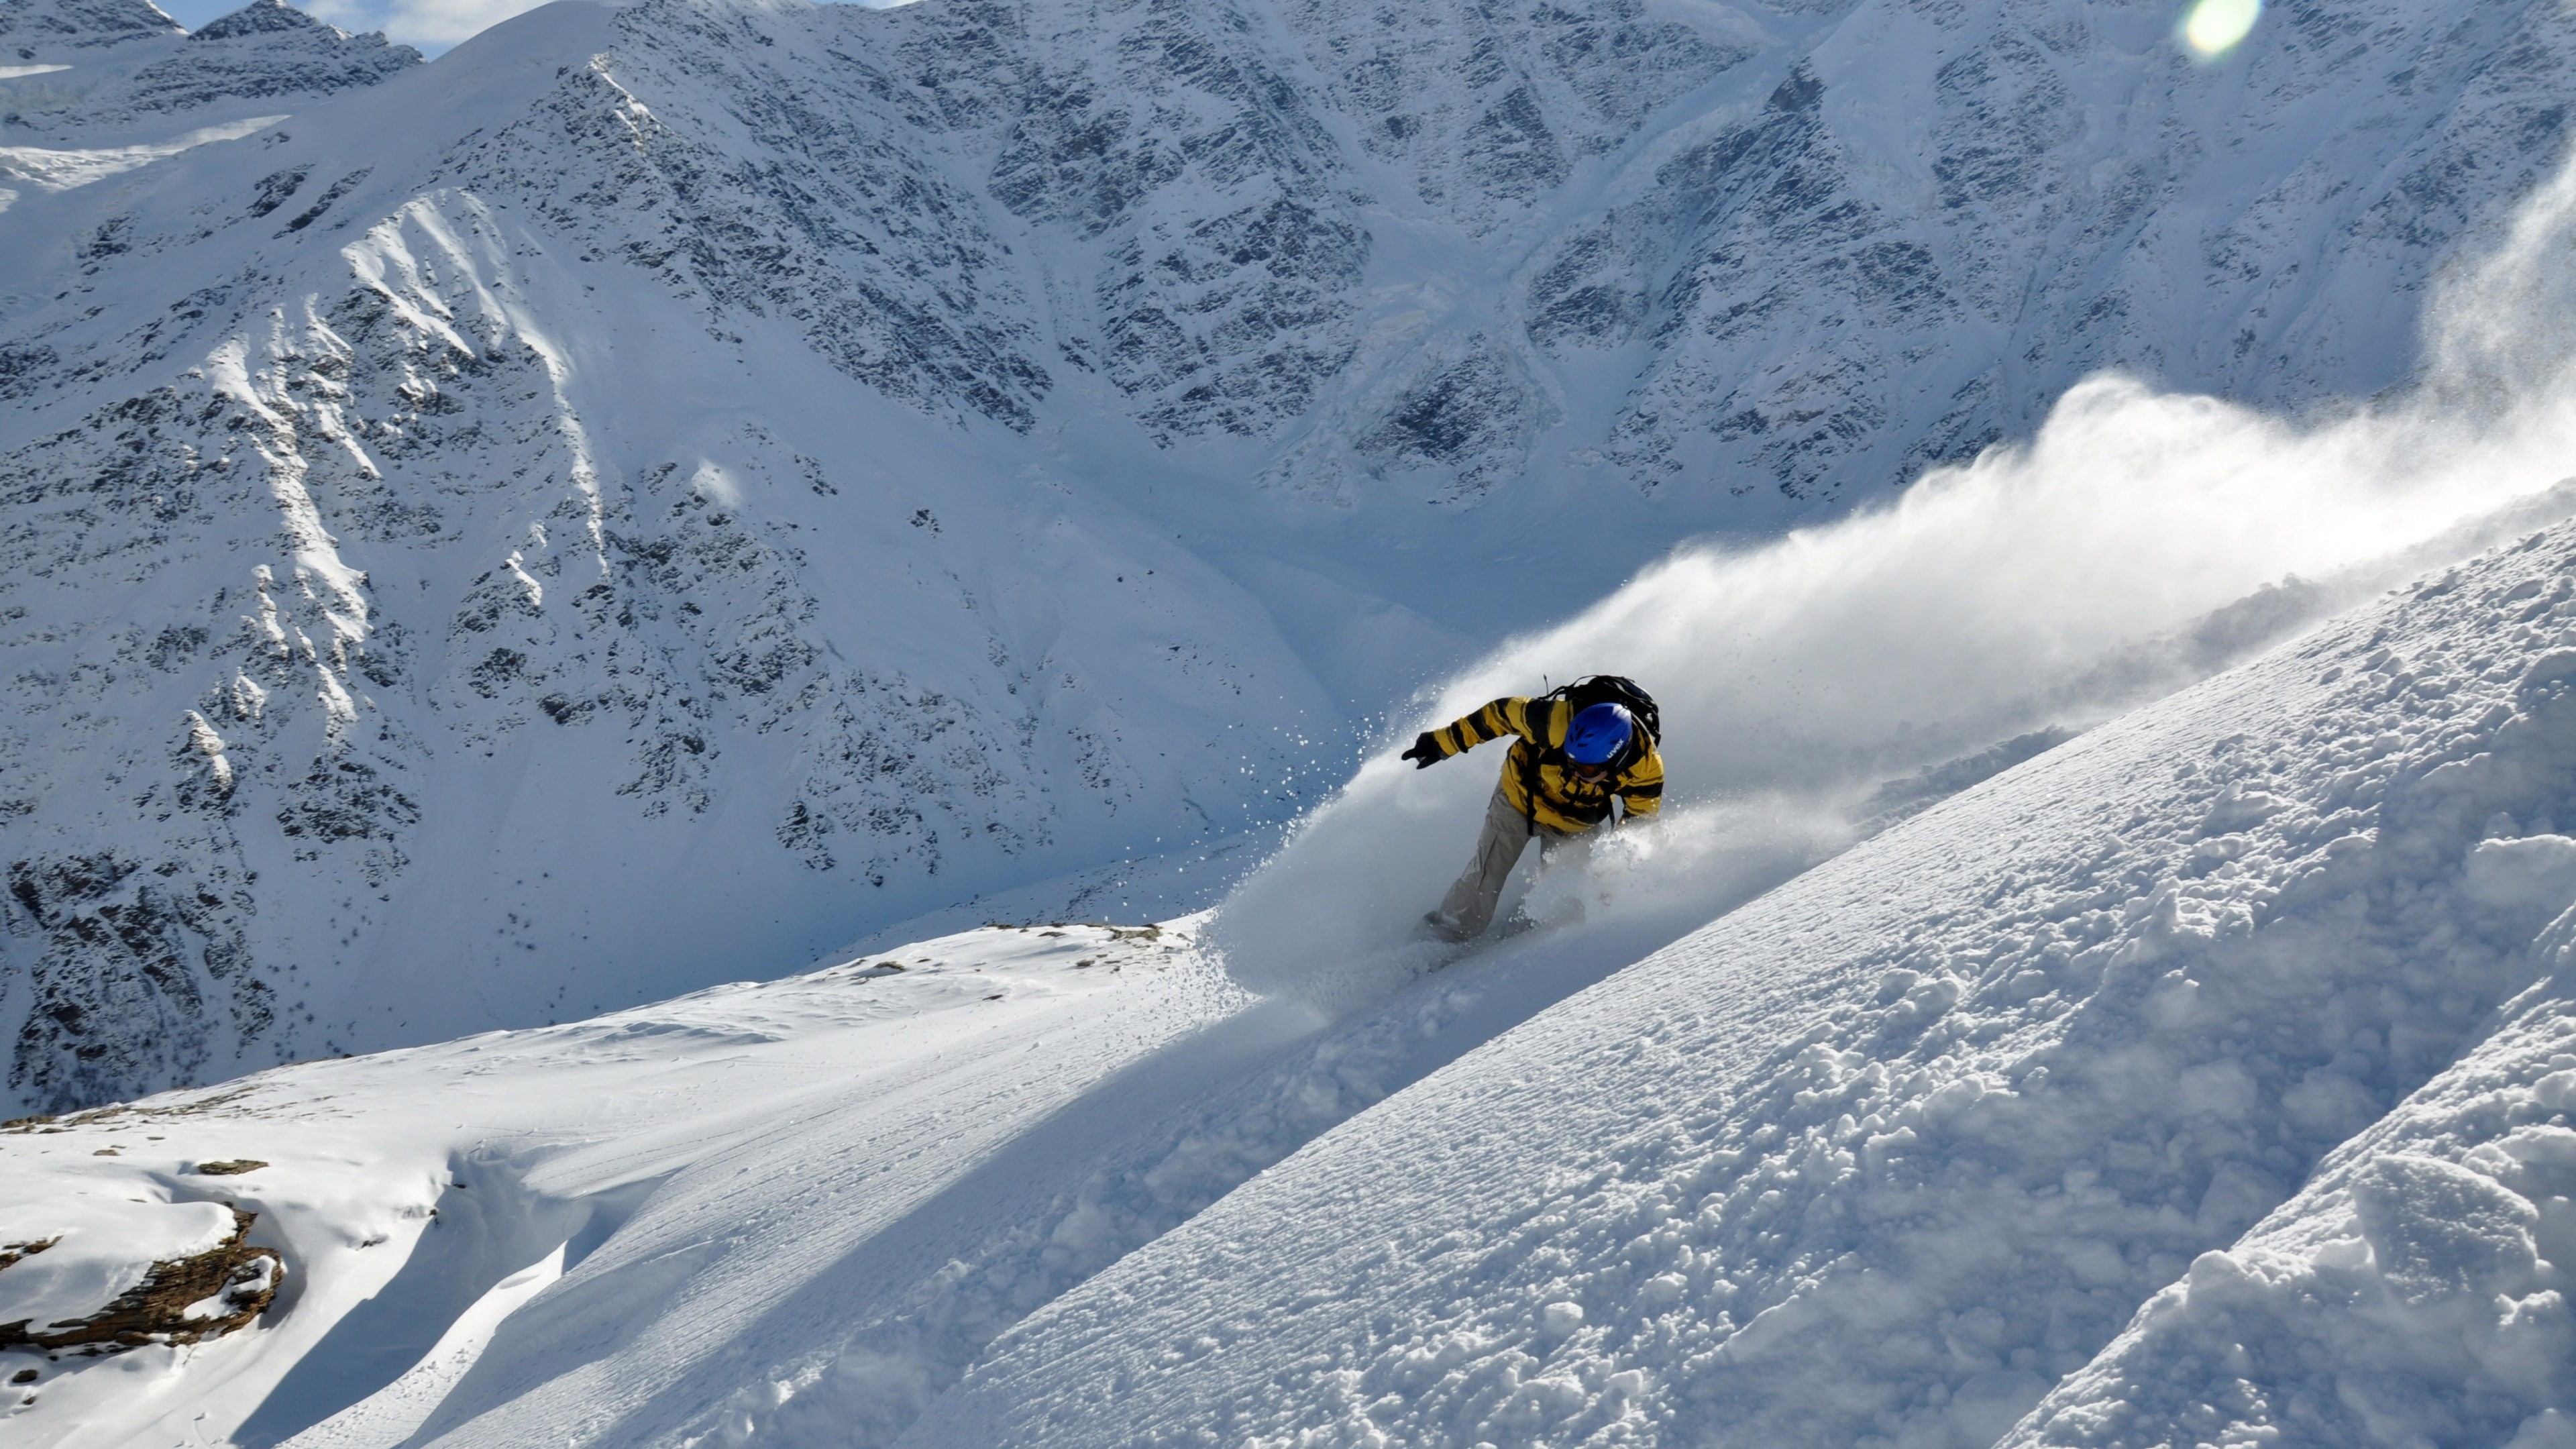 snowboarding, mountains, cold temperature, winter, sport, winter sport